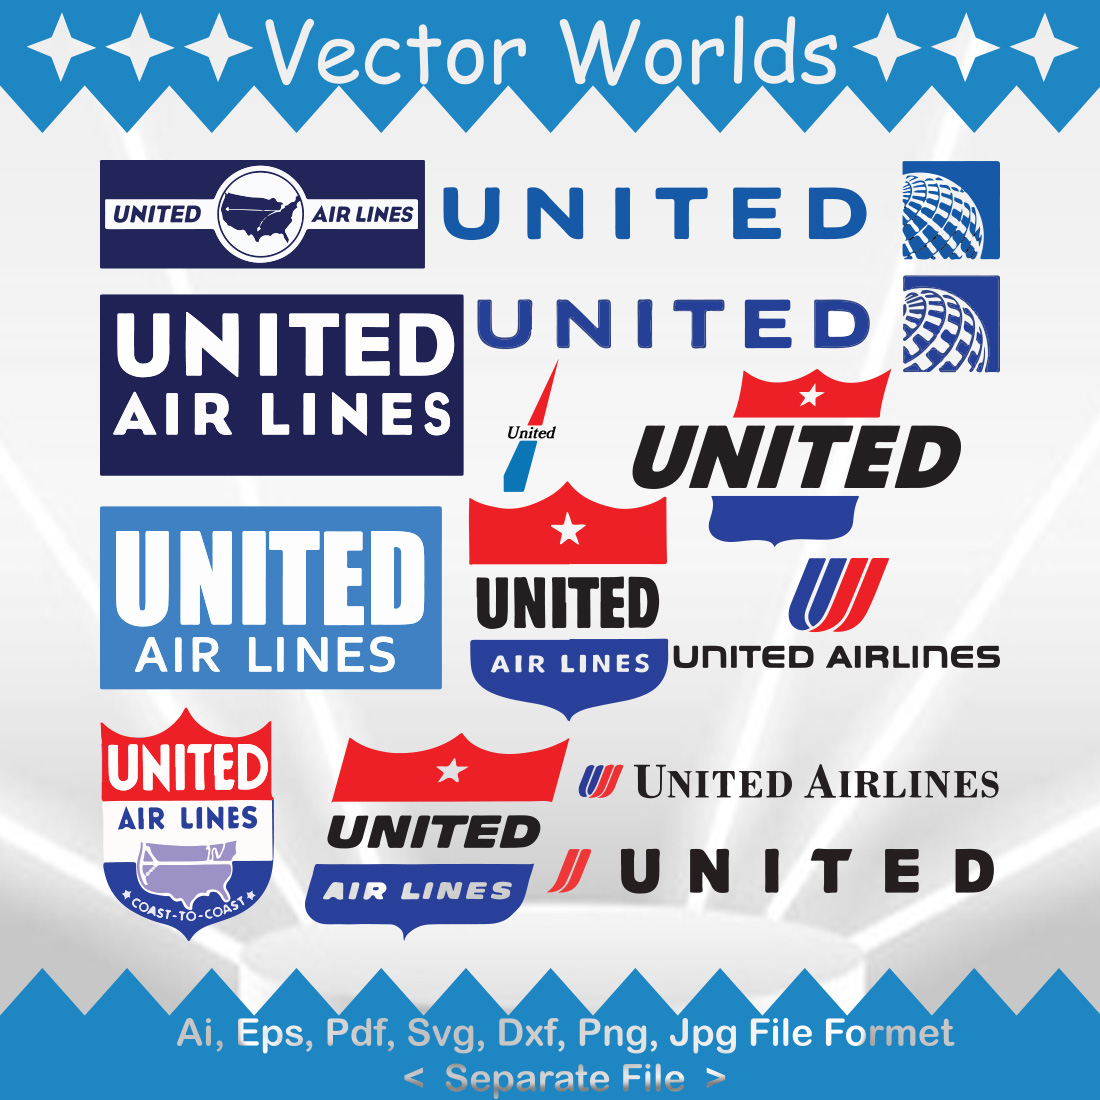 United Airlines Logo SVG Vector Design cover image.